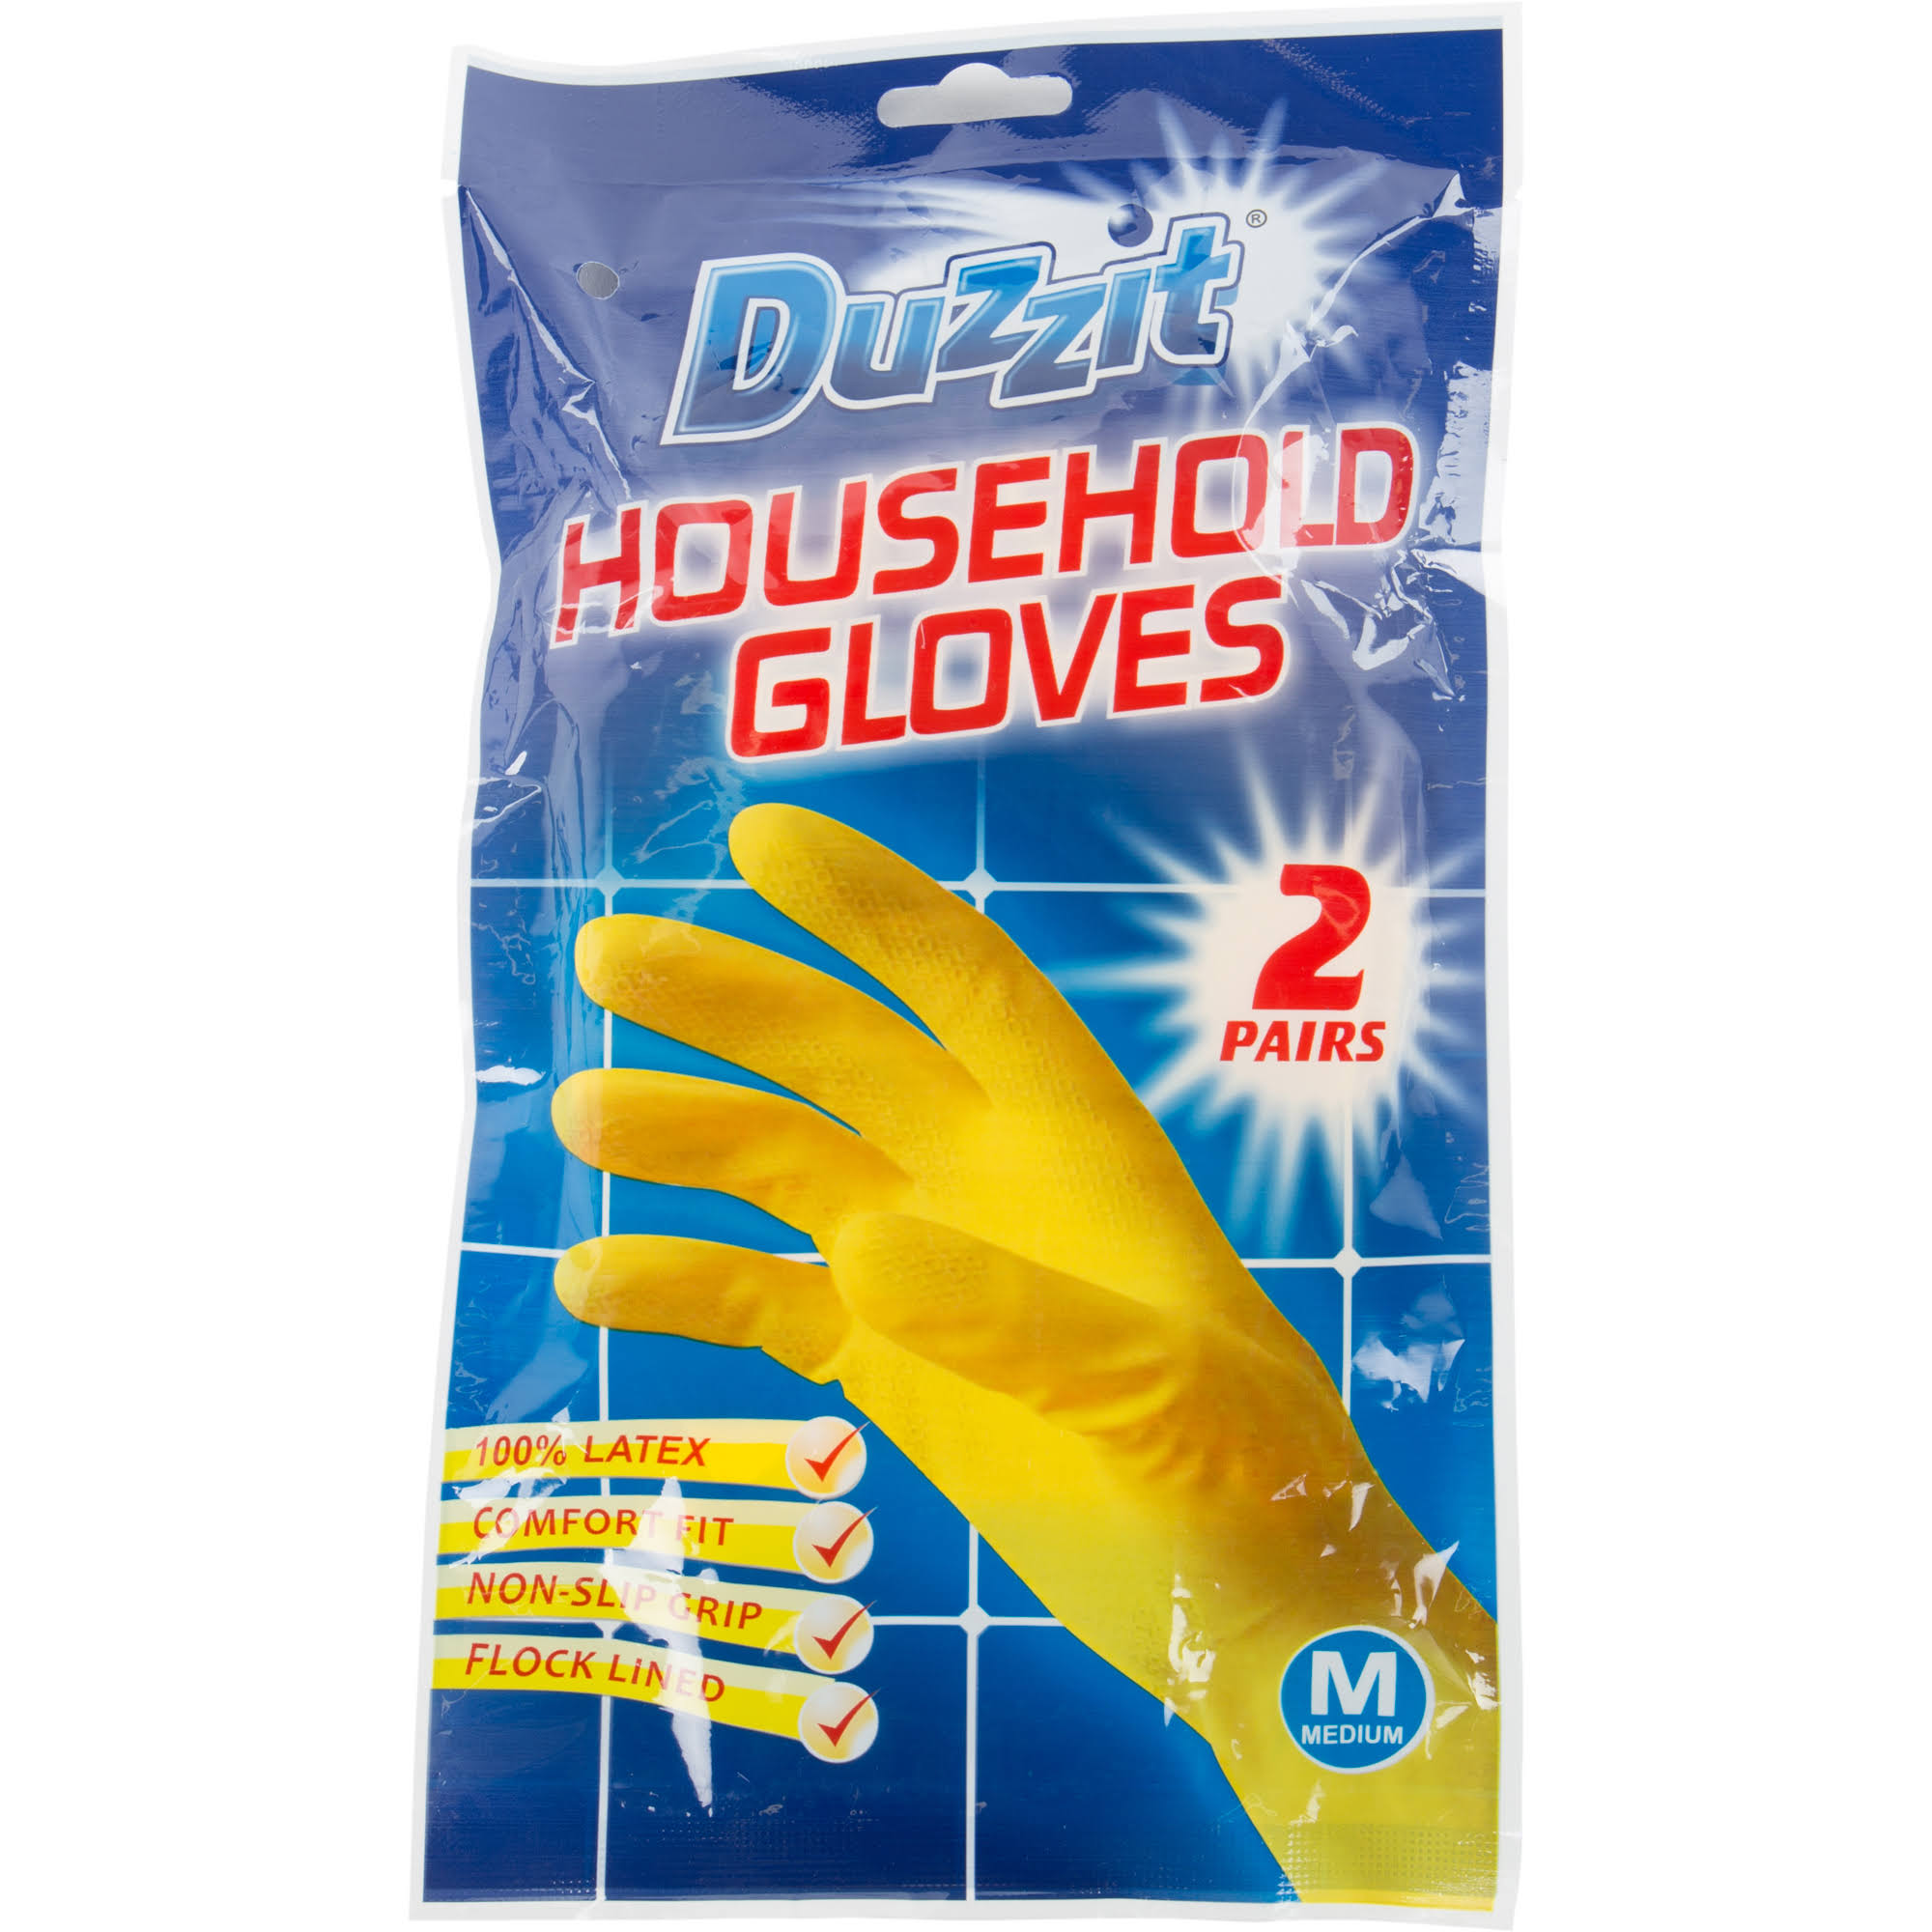 Duzzit Household Gloves 2 Pack Medium